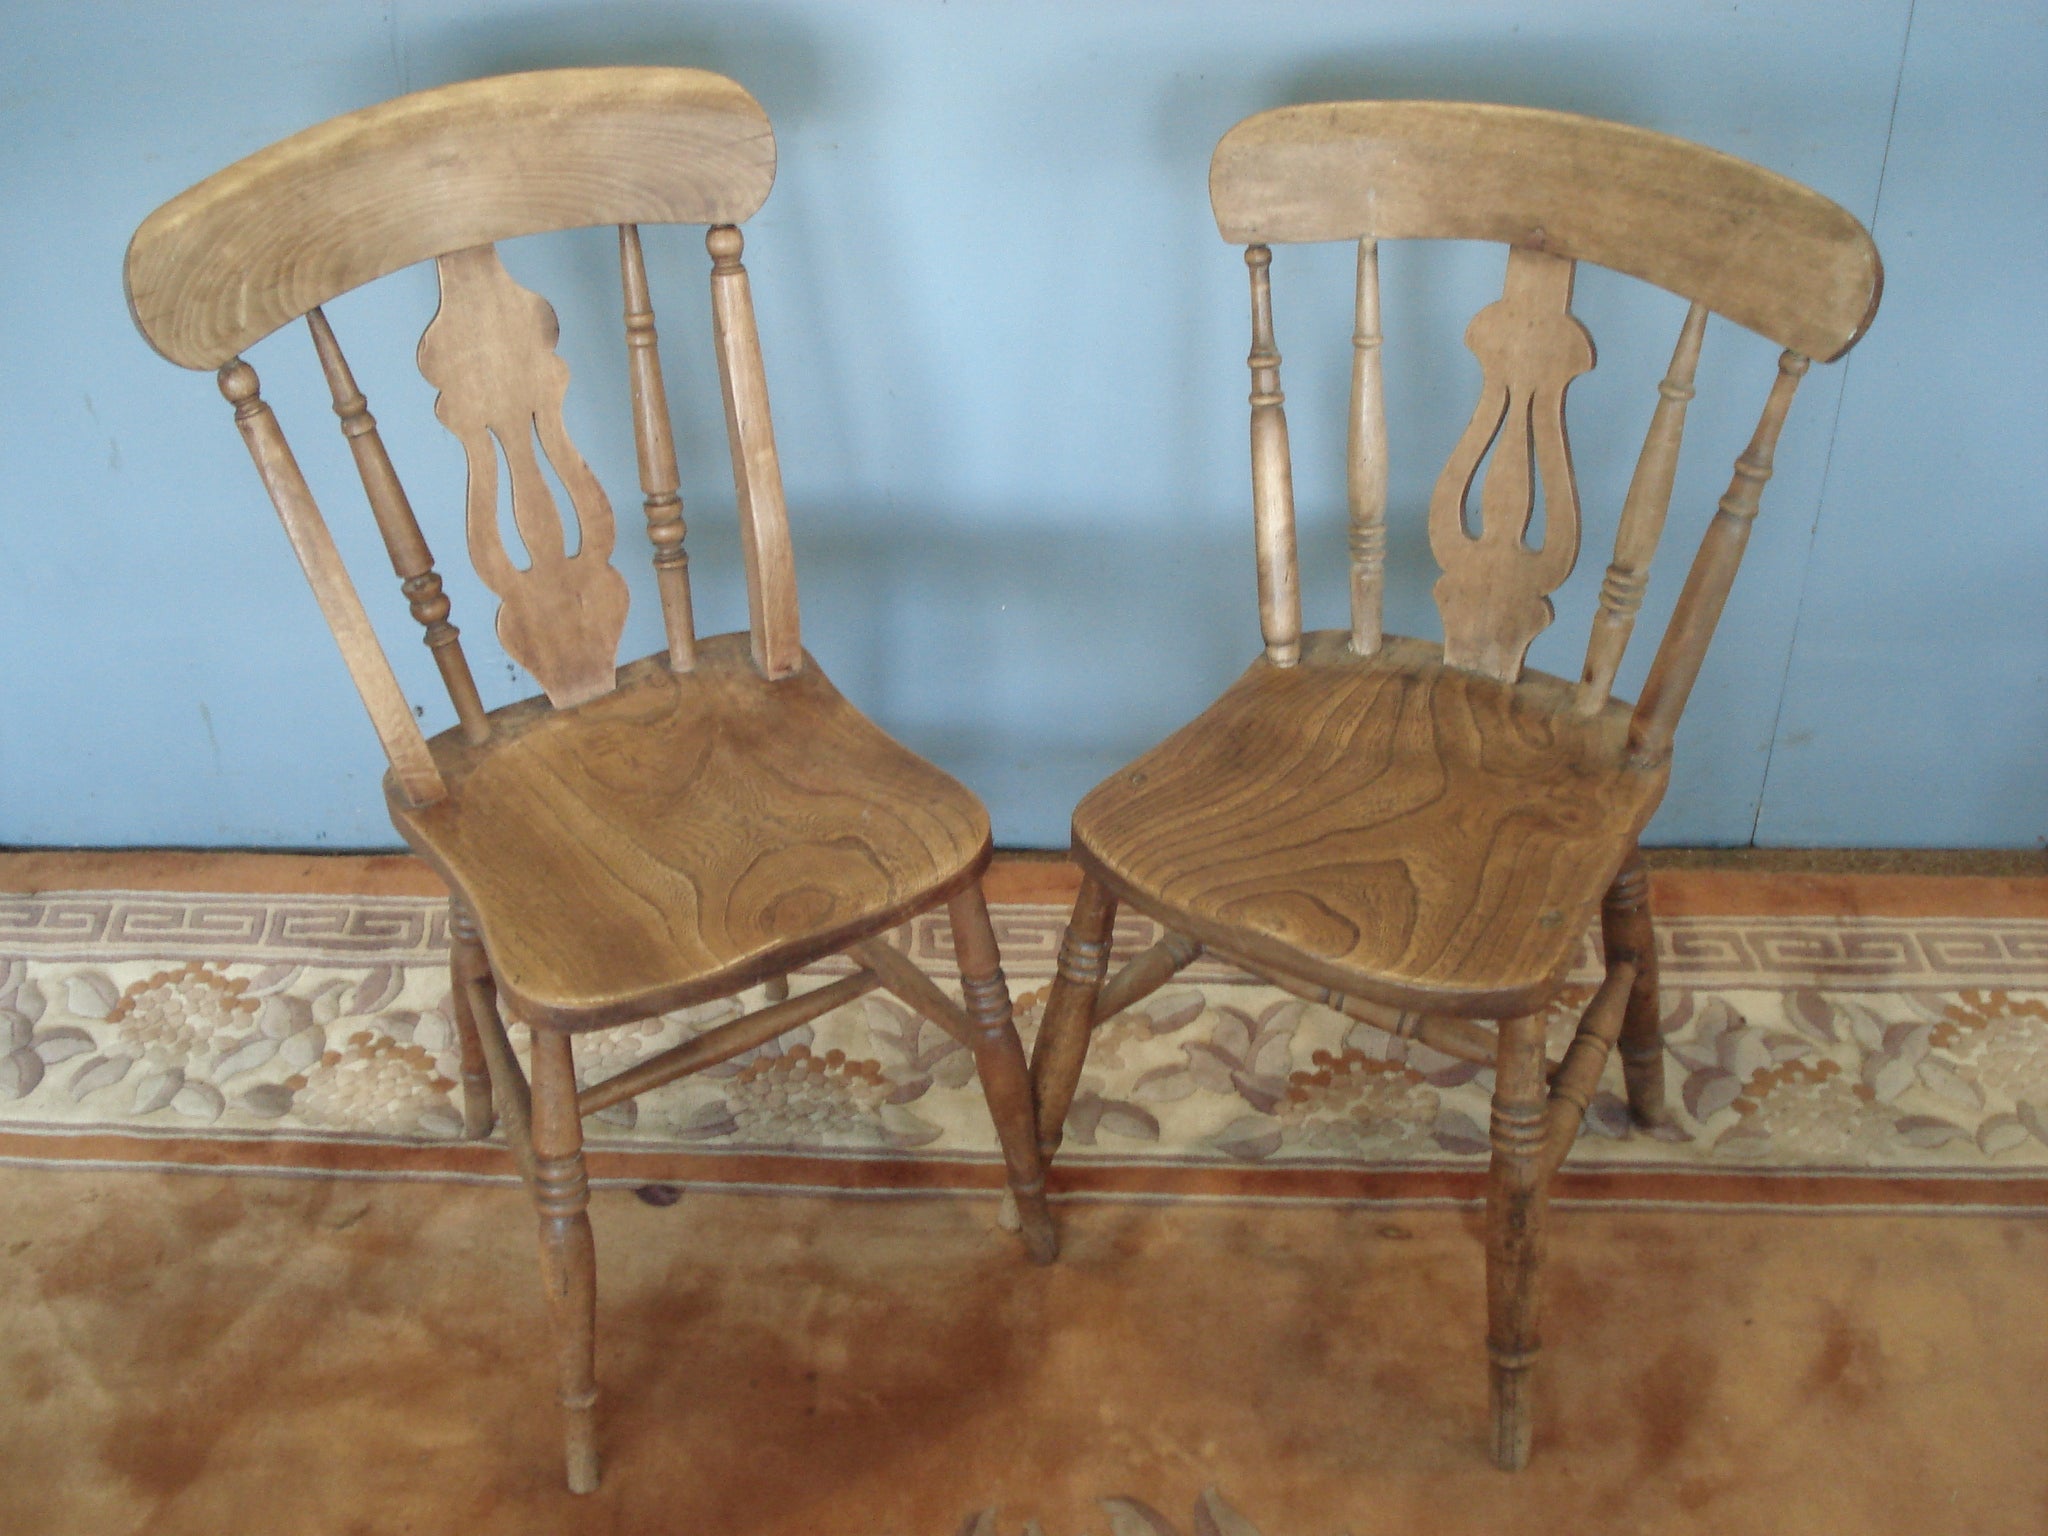 Four Victorian kitchen chairs.